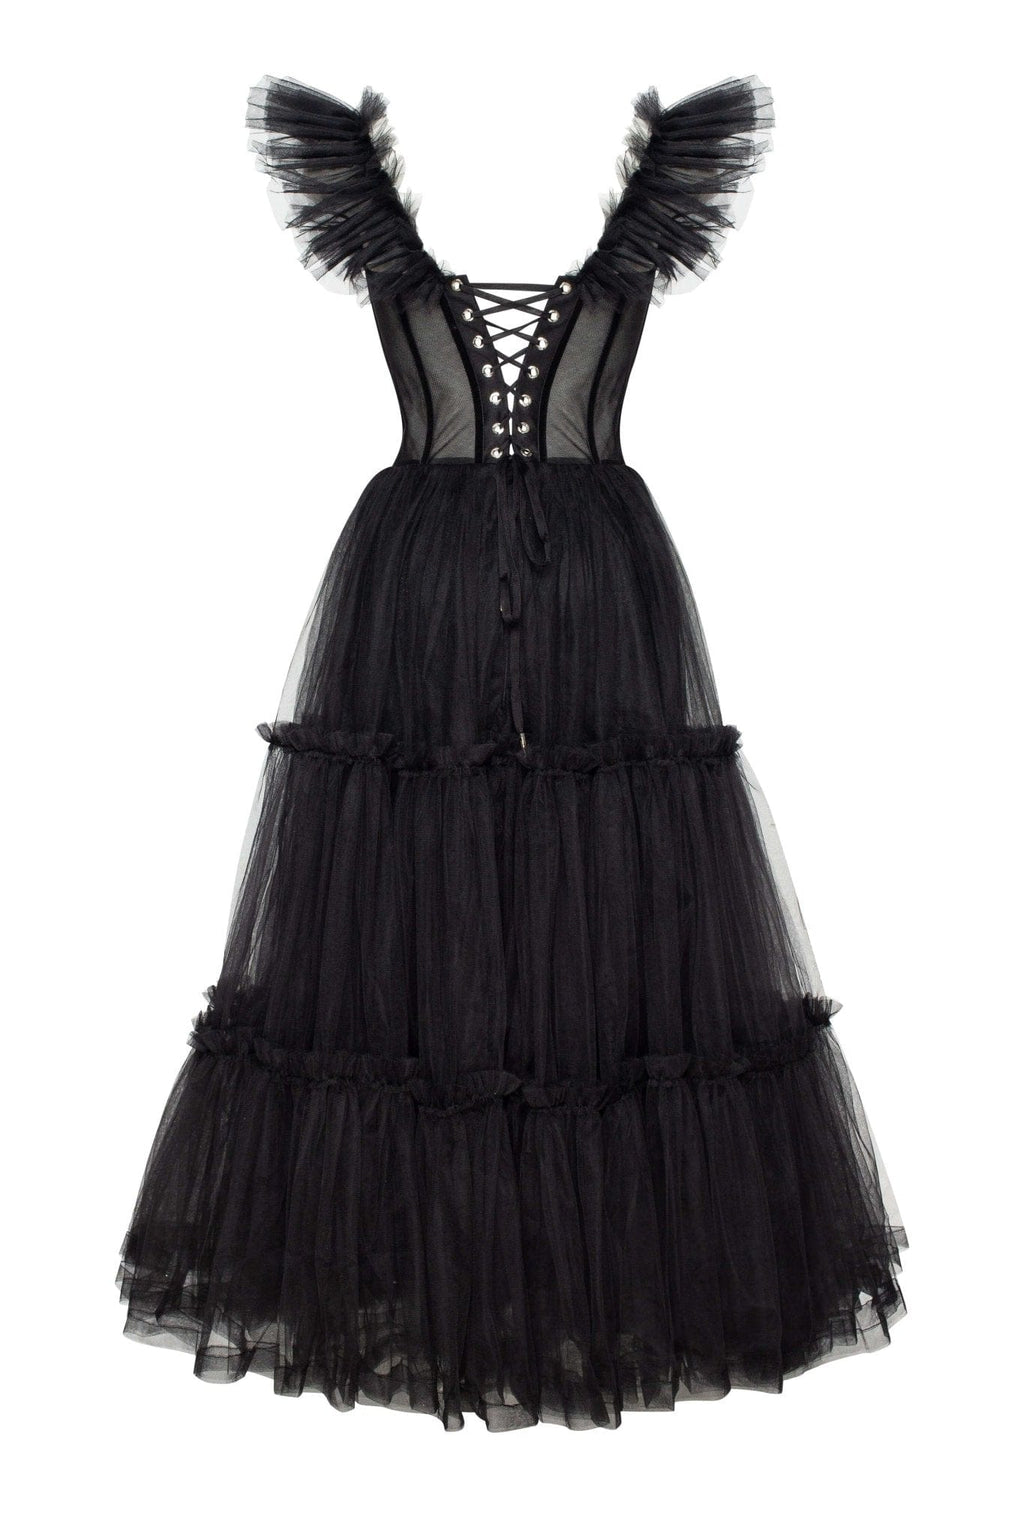 45 Elegant Black Wedding Dresses Sure to Wow